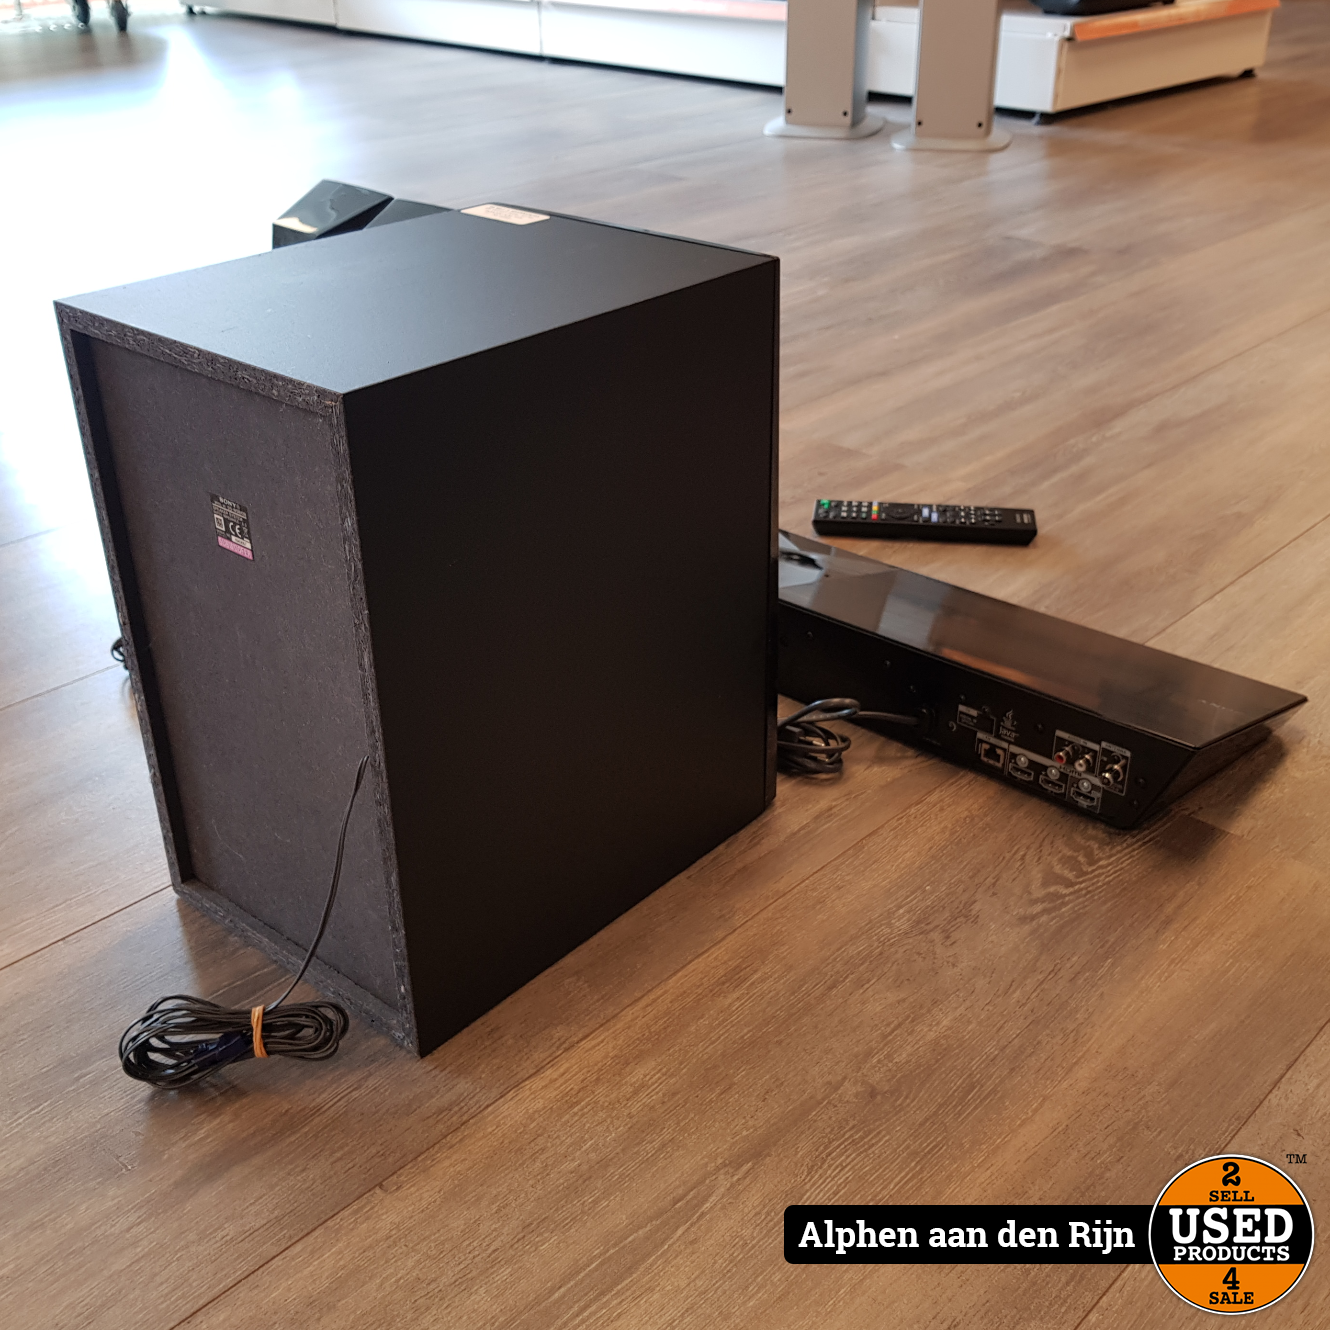 spek rechtbank dubbele Sony BDV-N5200W Bluray Home cinema set - Used Products Alphen aan den Rijn